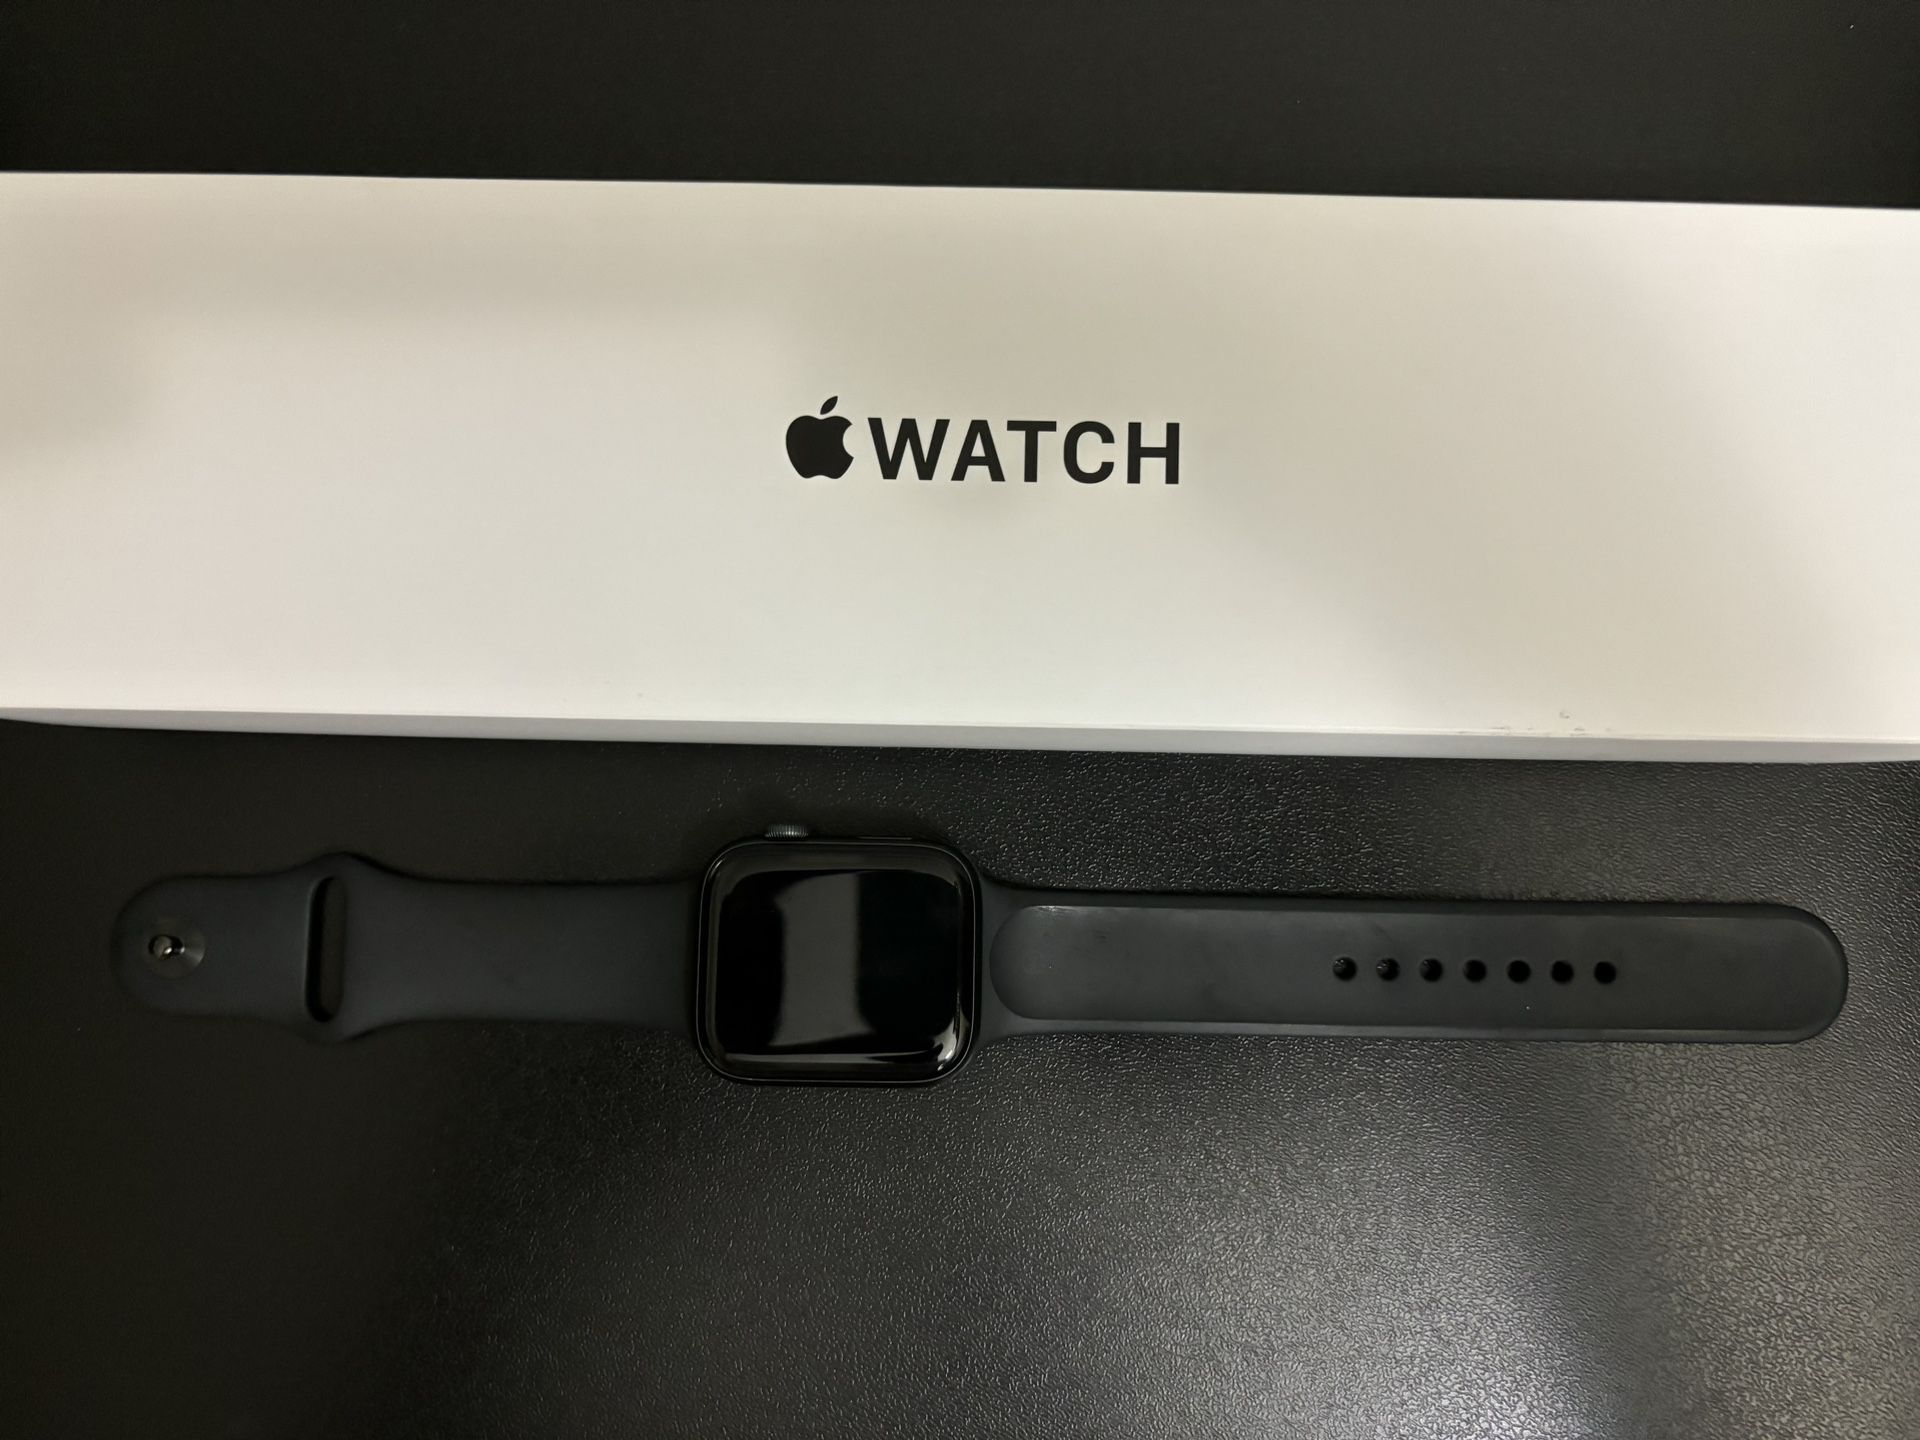 Apple Watch (1st Generation)